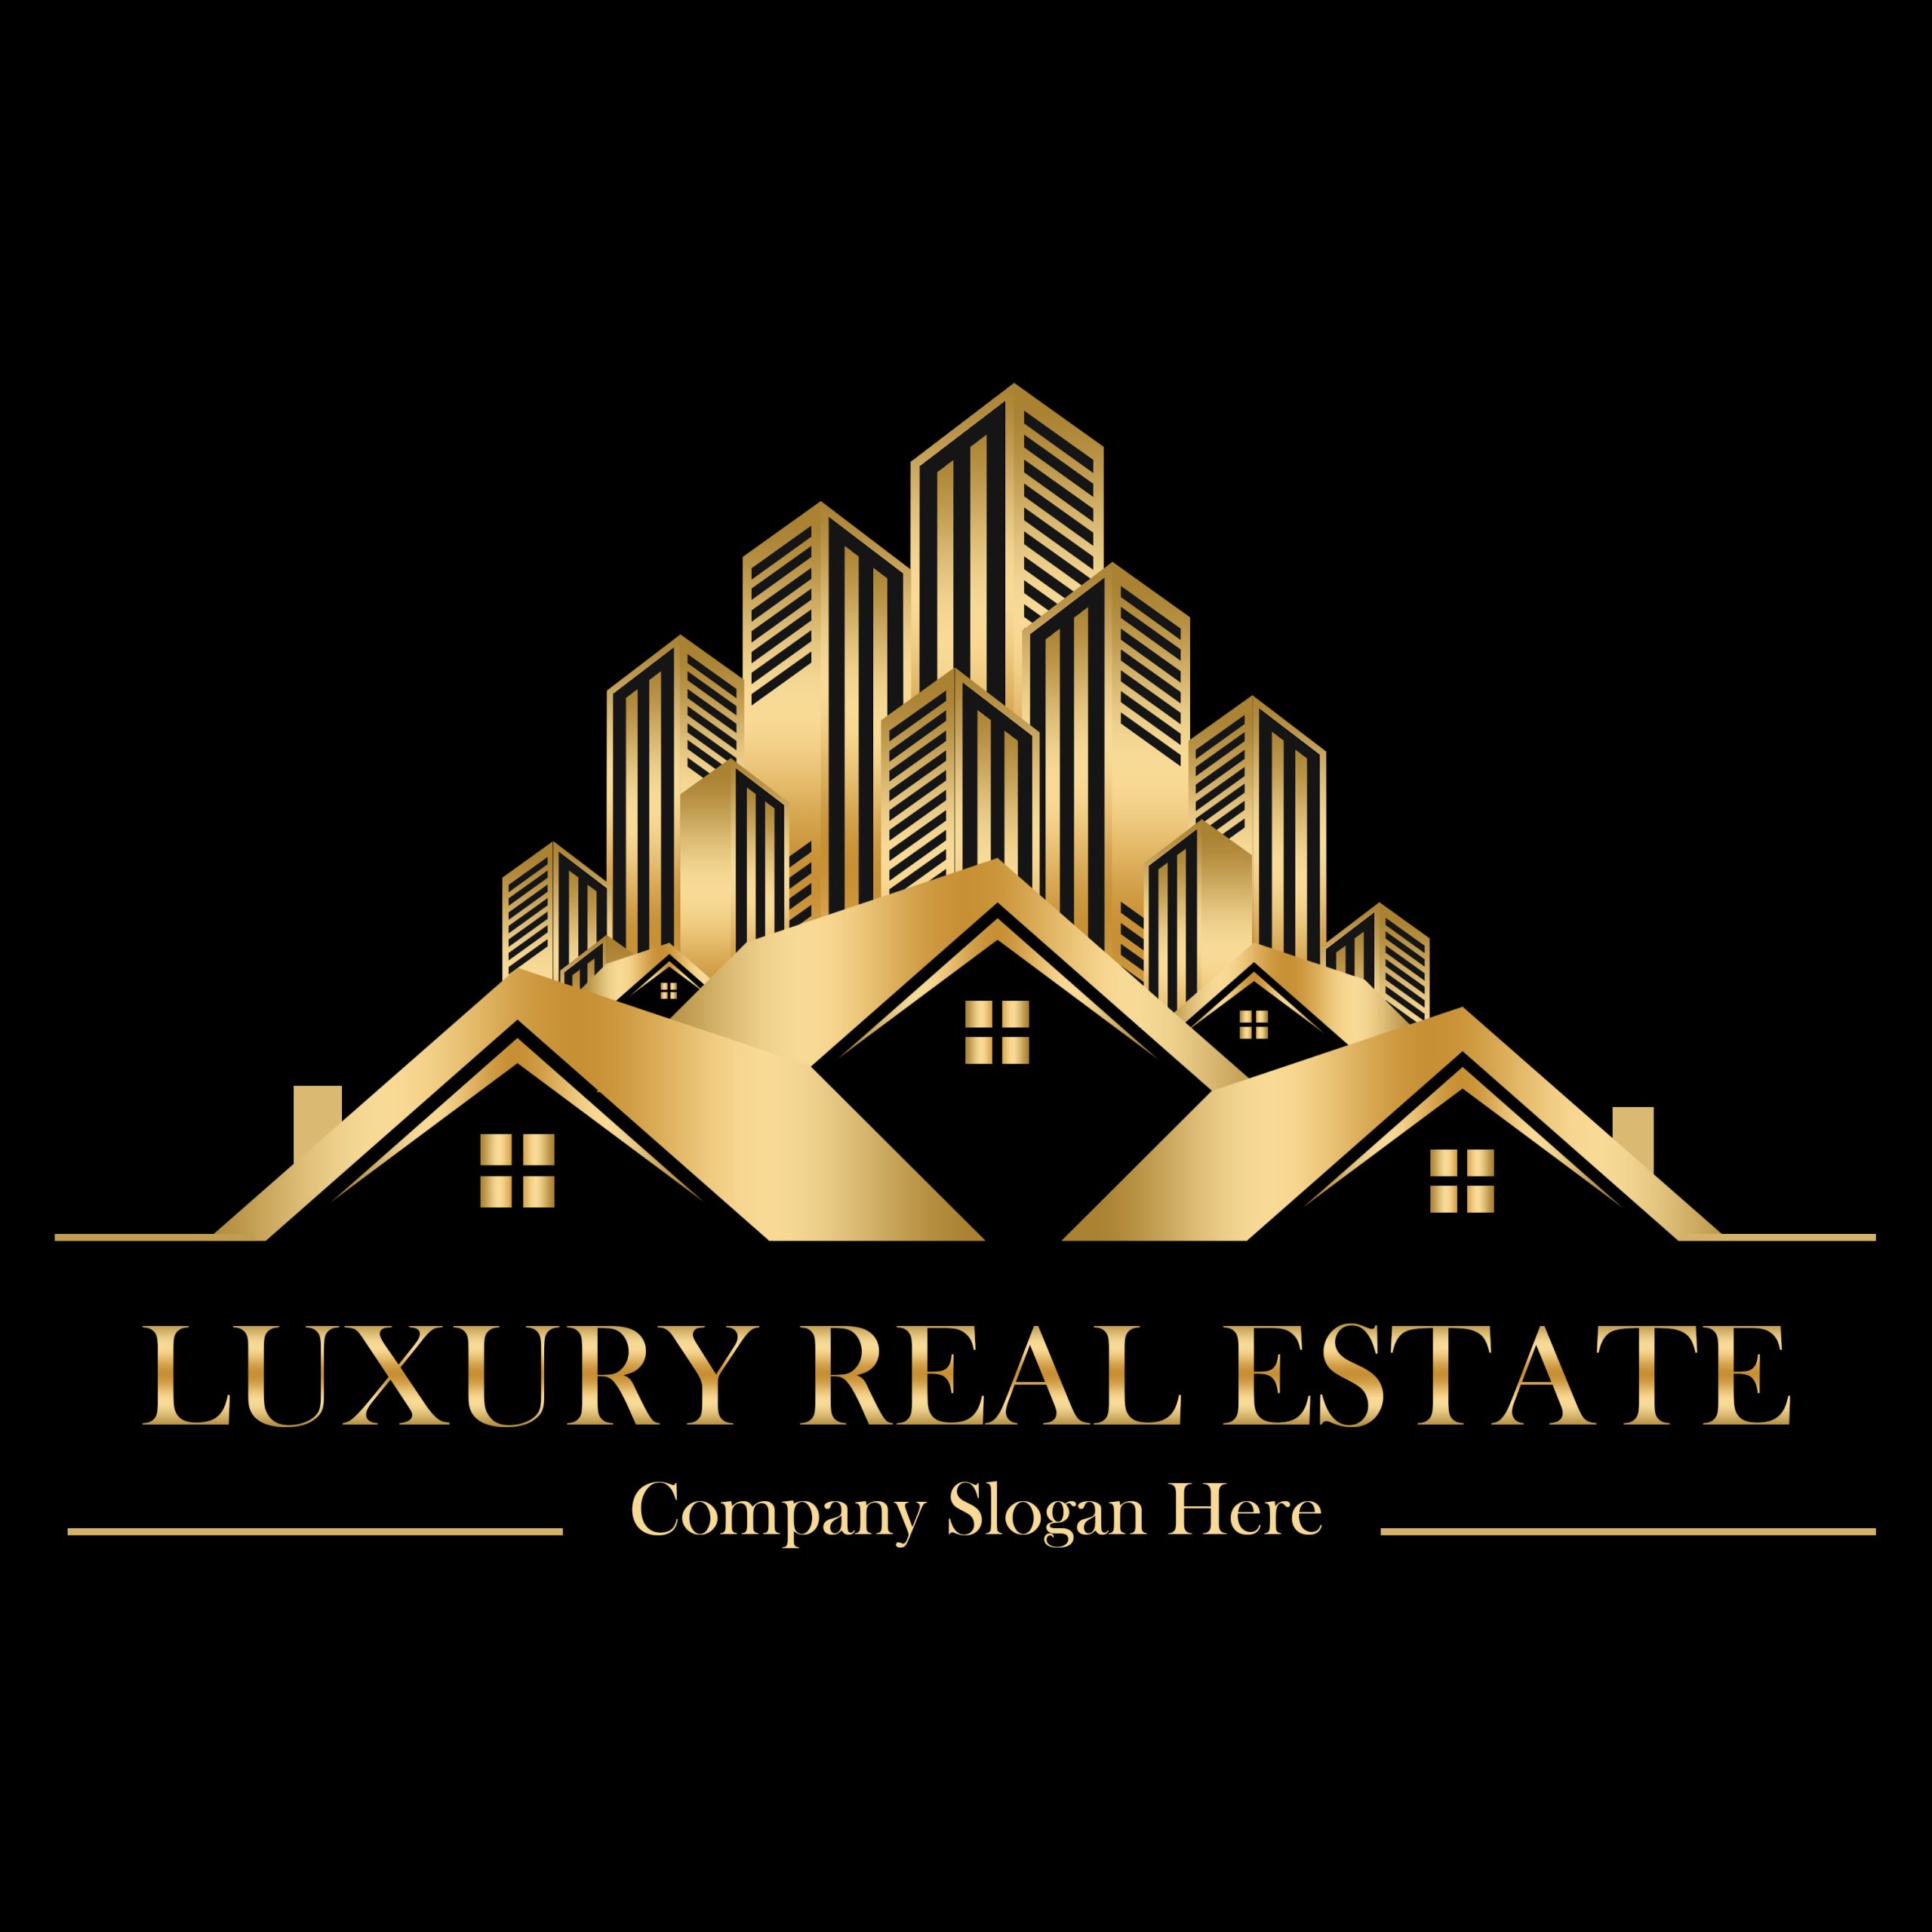 Luxury Real Estate Logo Design Stock Vector - Illustration of city, house:  151847046